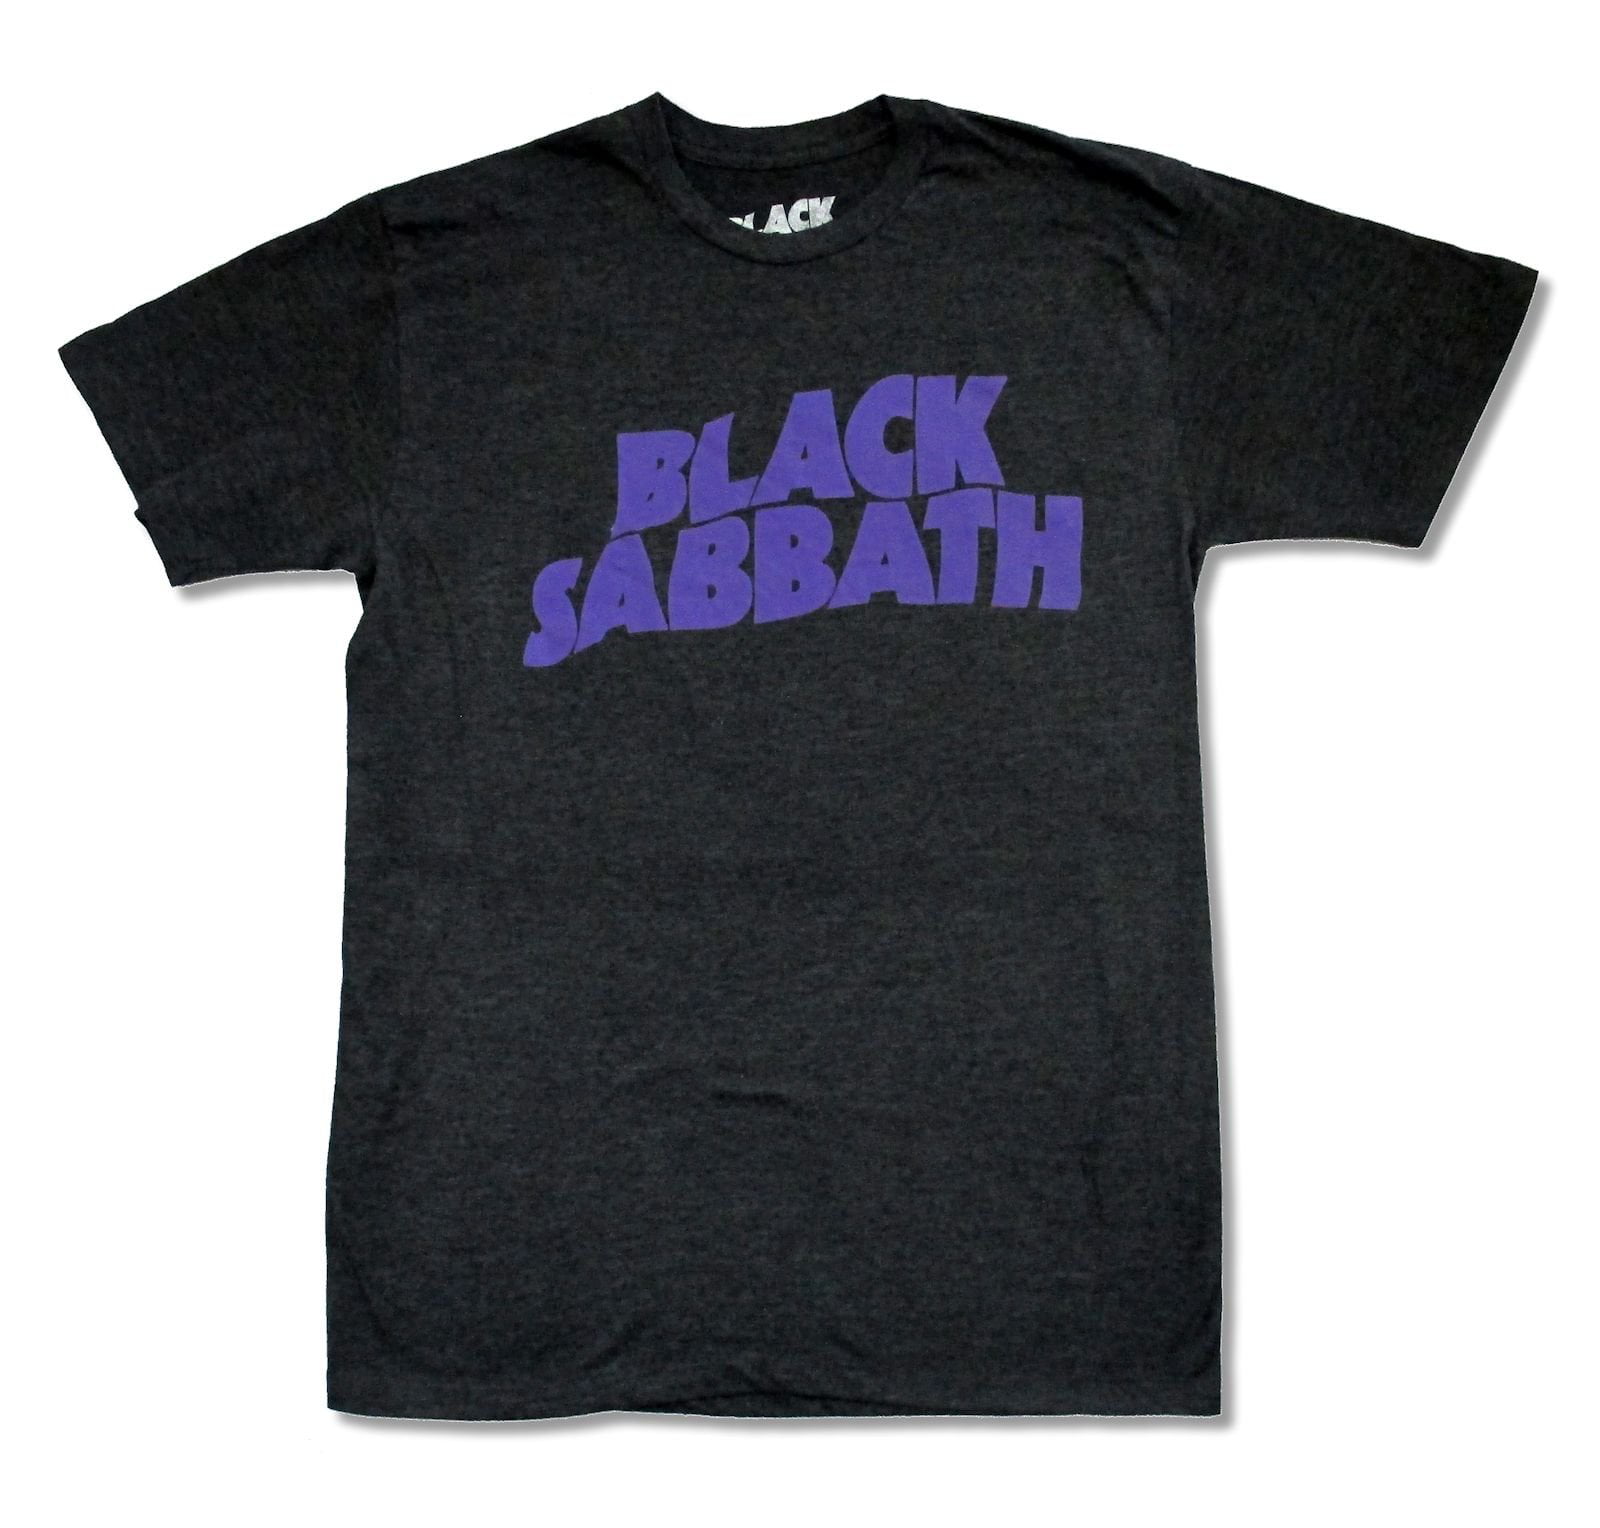 Black Sabbath - Adult Black Sabbath 